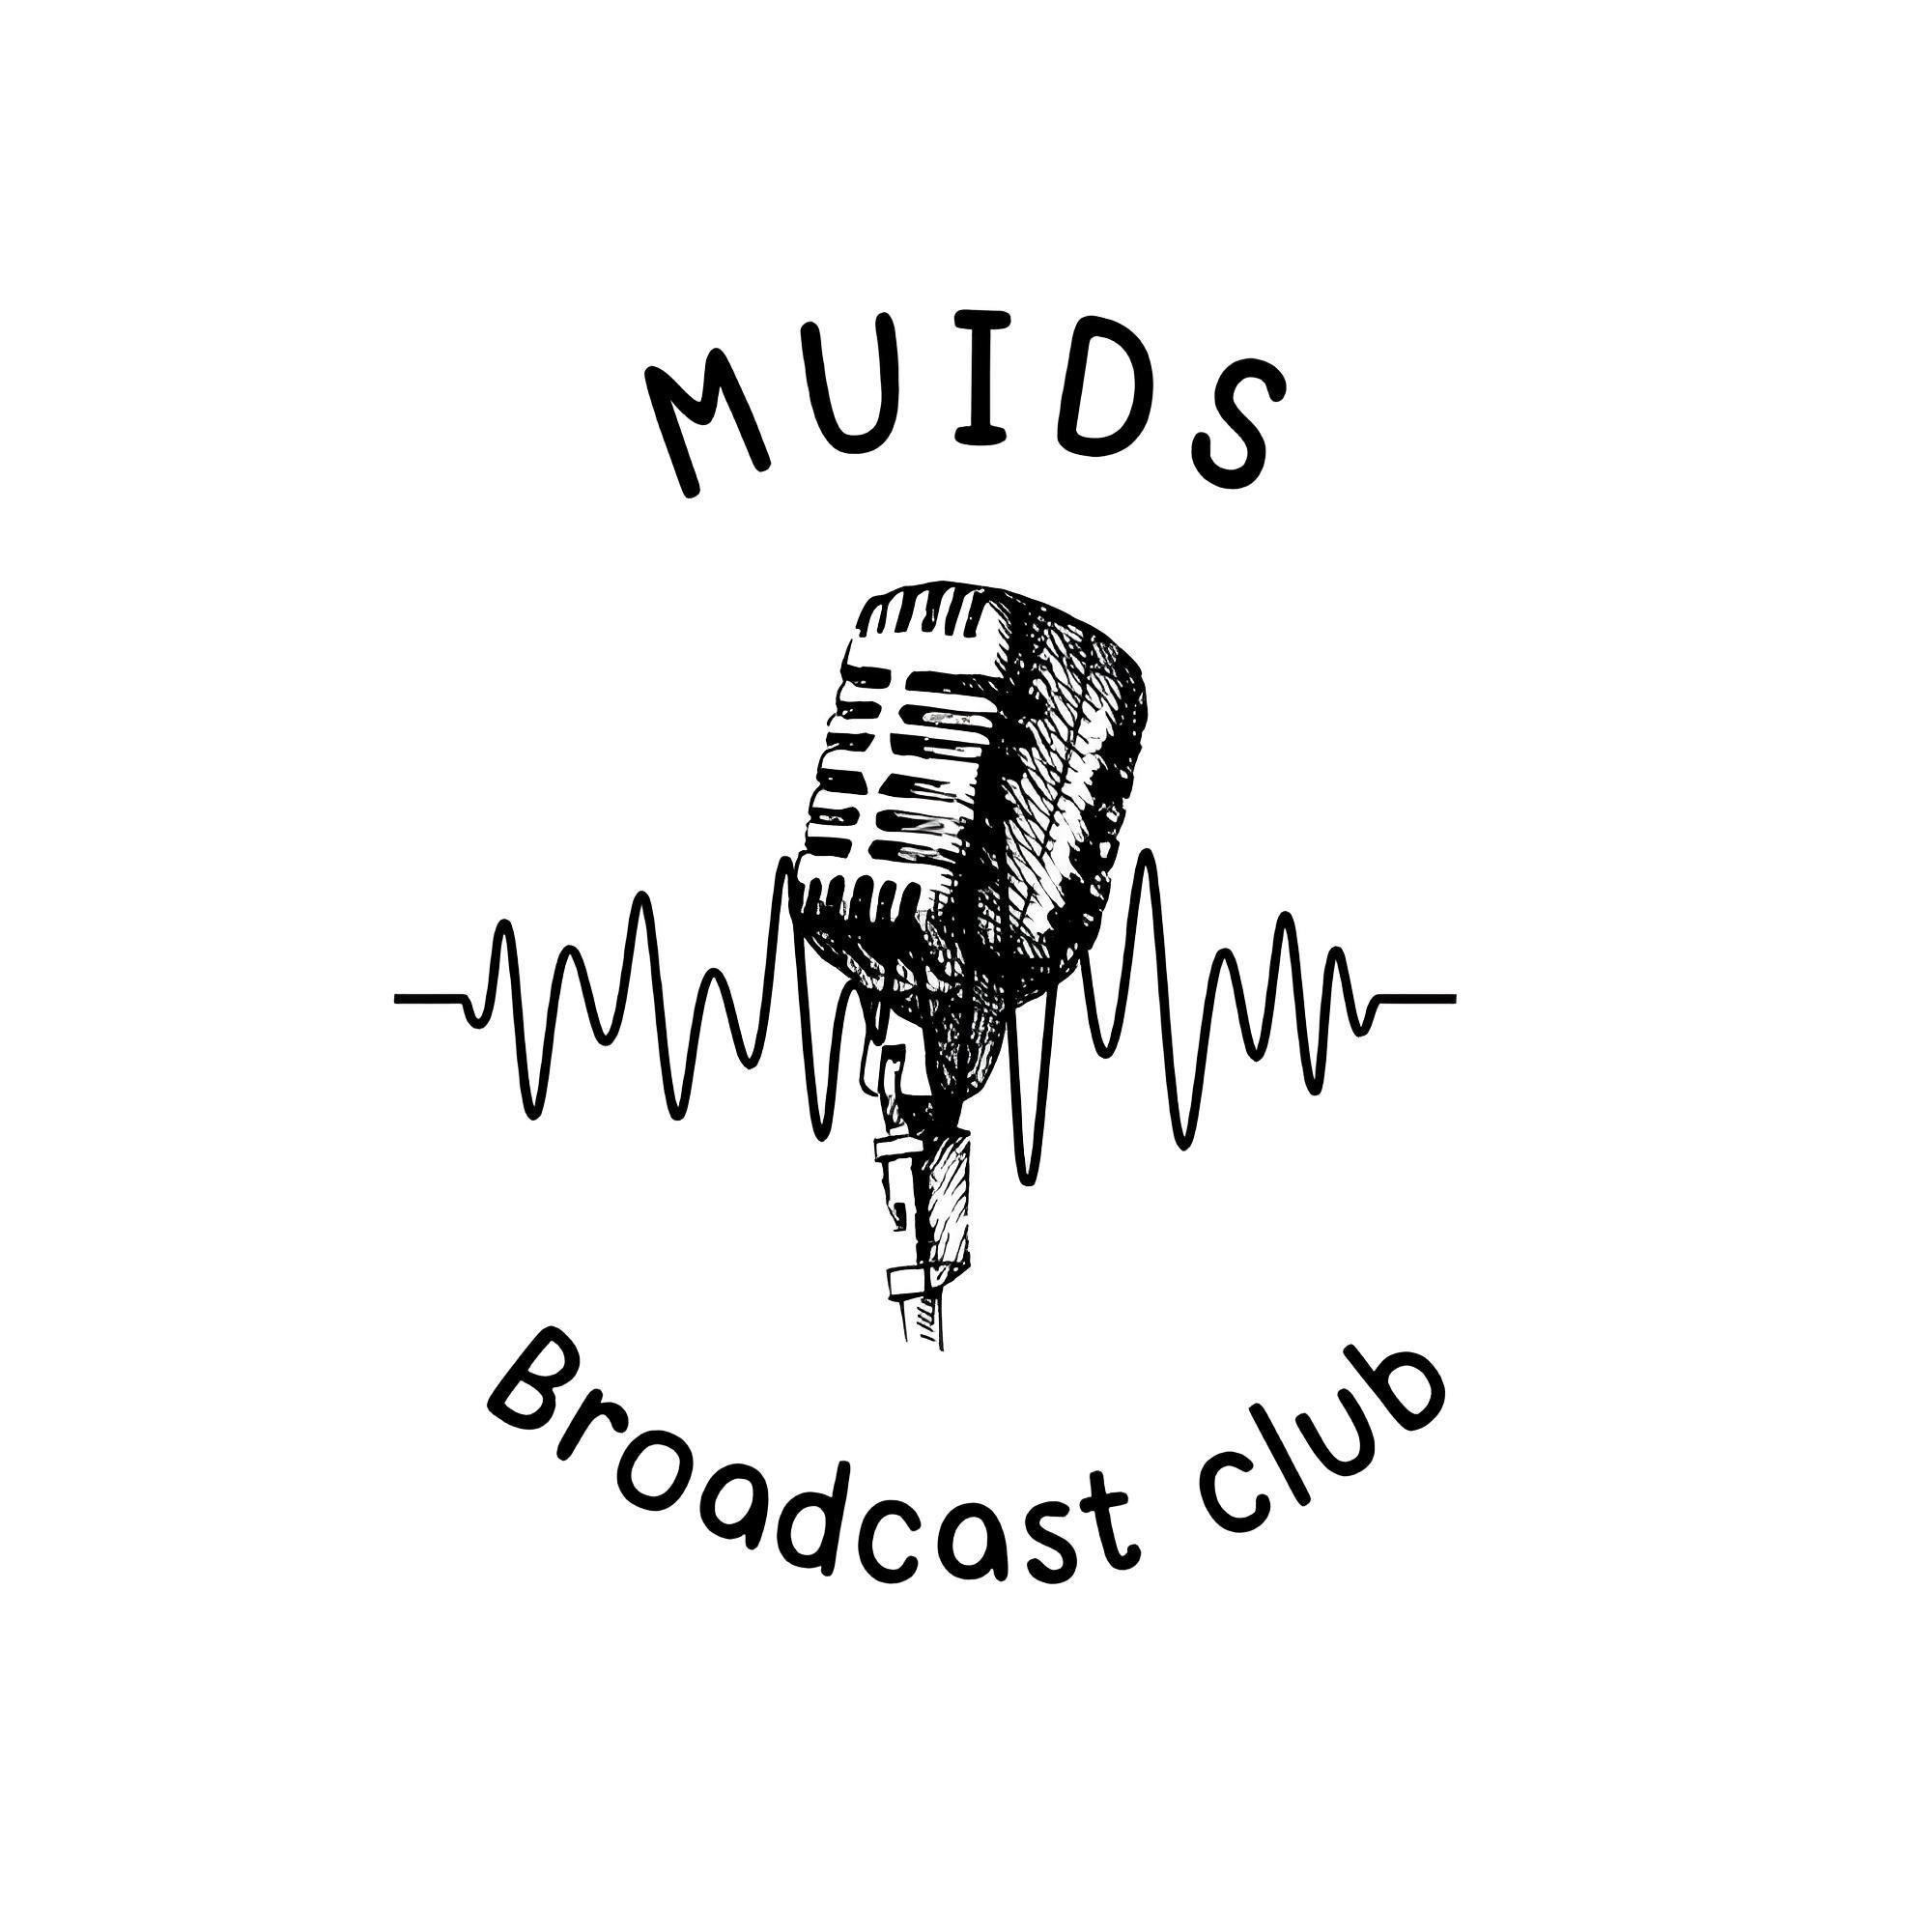 MUIDS Broadcast Club